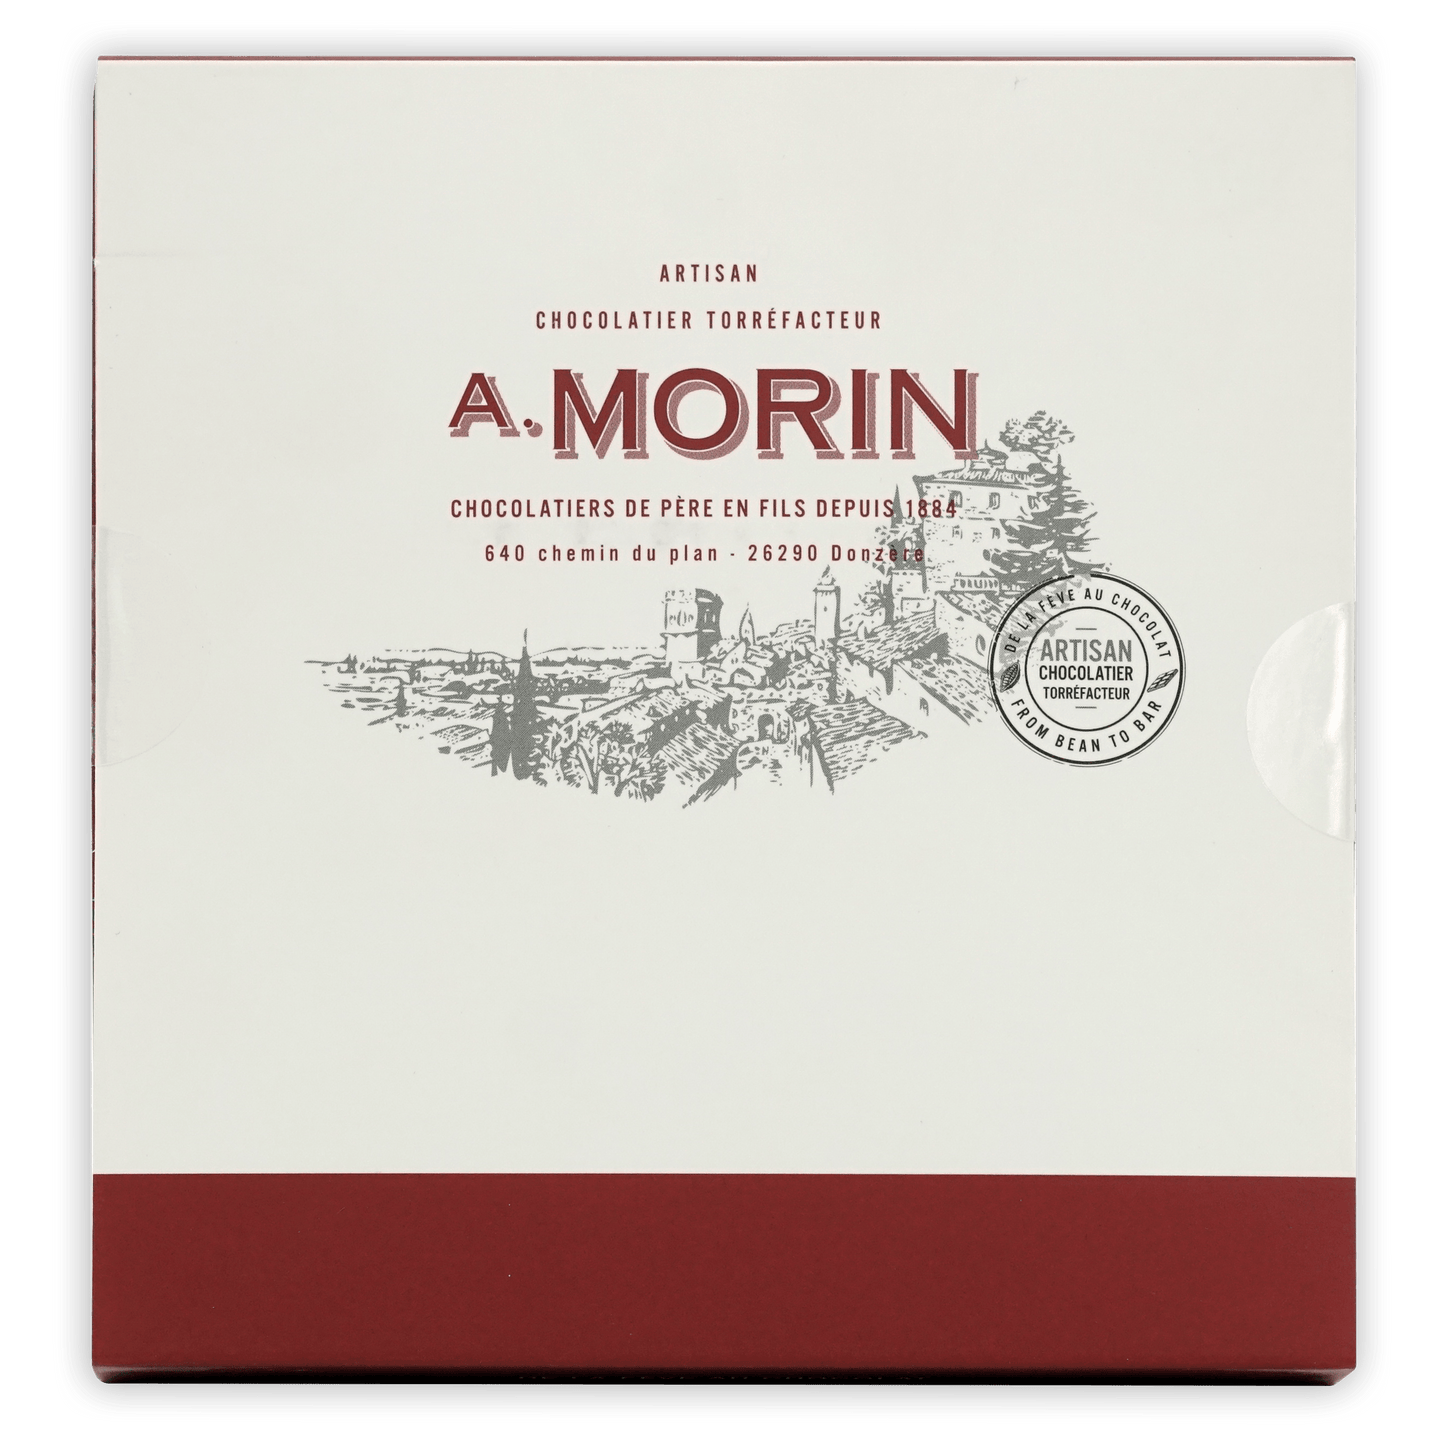 A. Morin Dark Chocolate Tasting Box by Bar & Cocoa